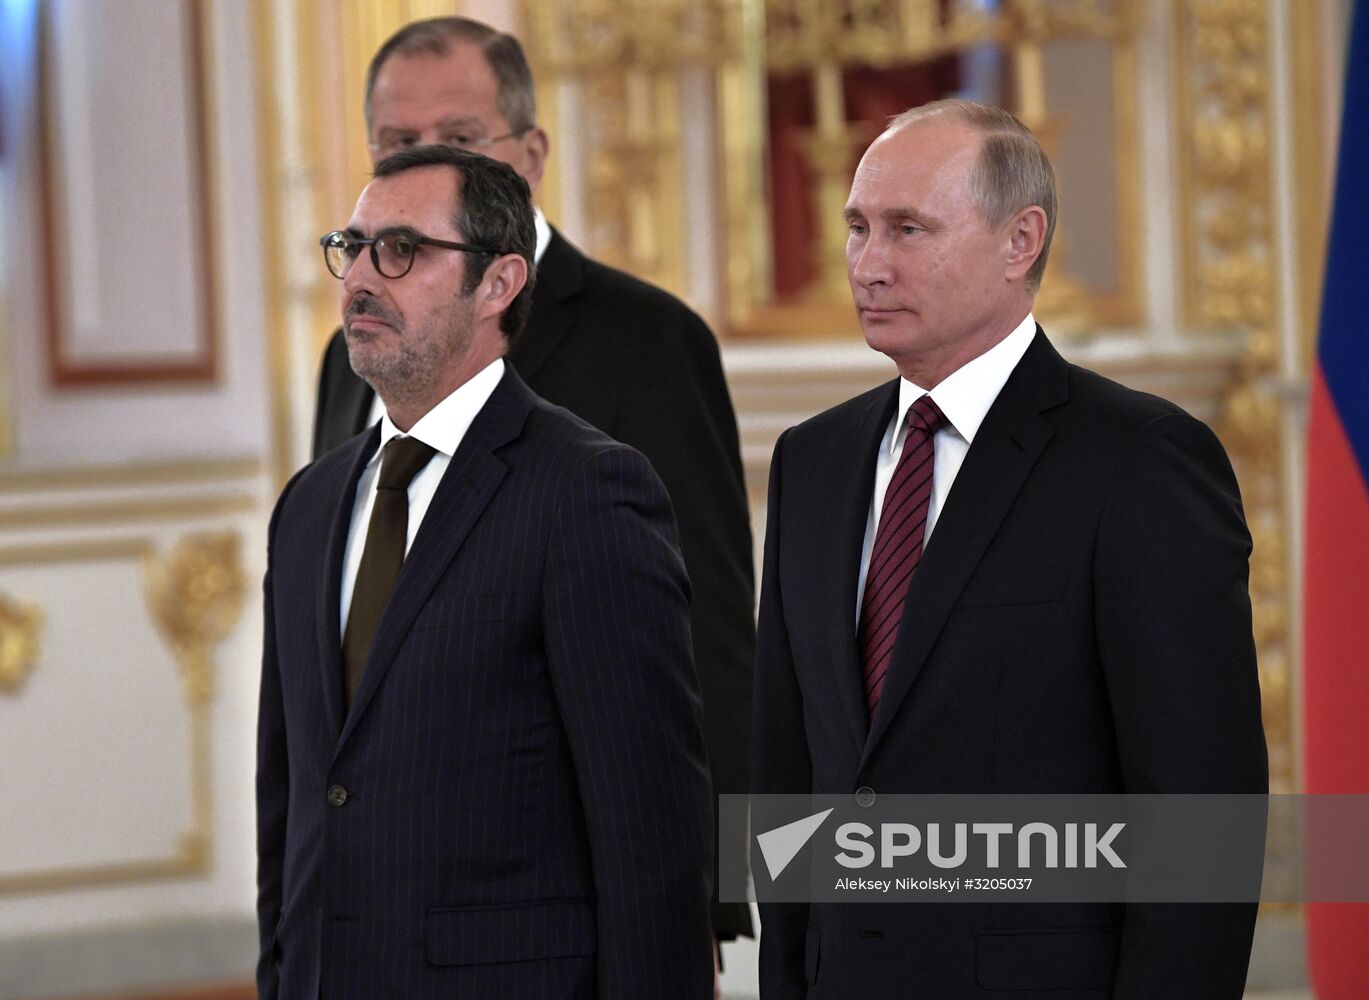 President Vladimir Putin receives credentials of 20 foreign ambassadors